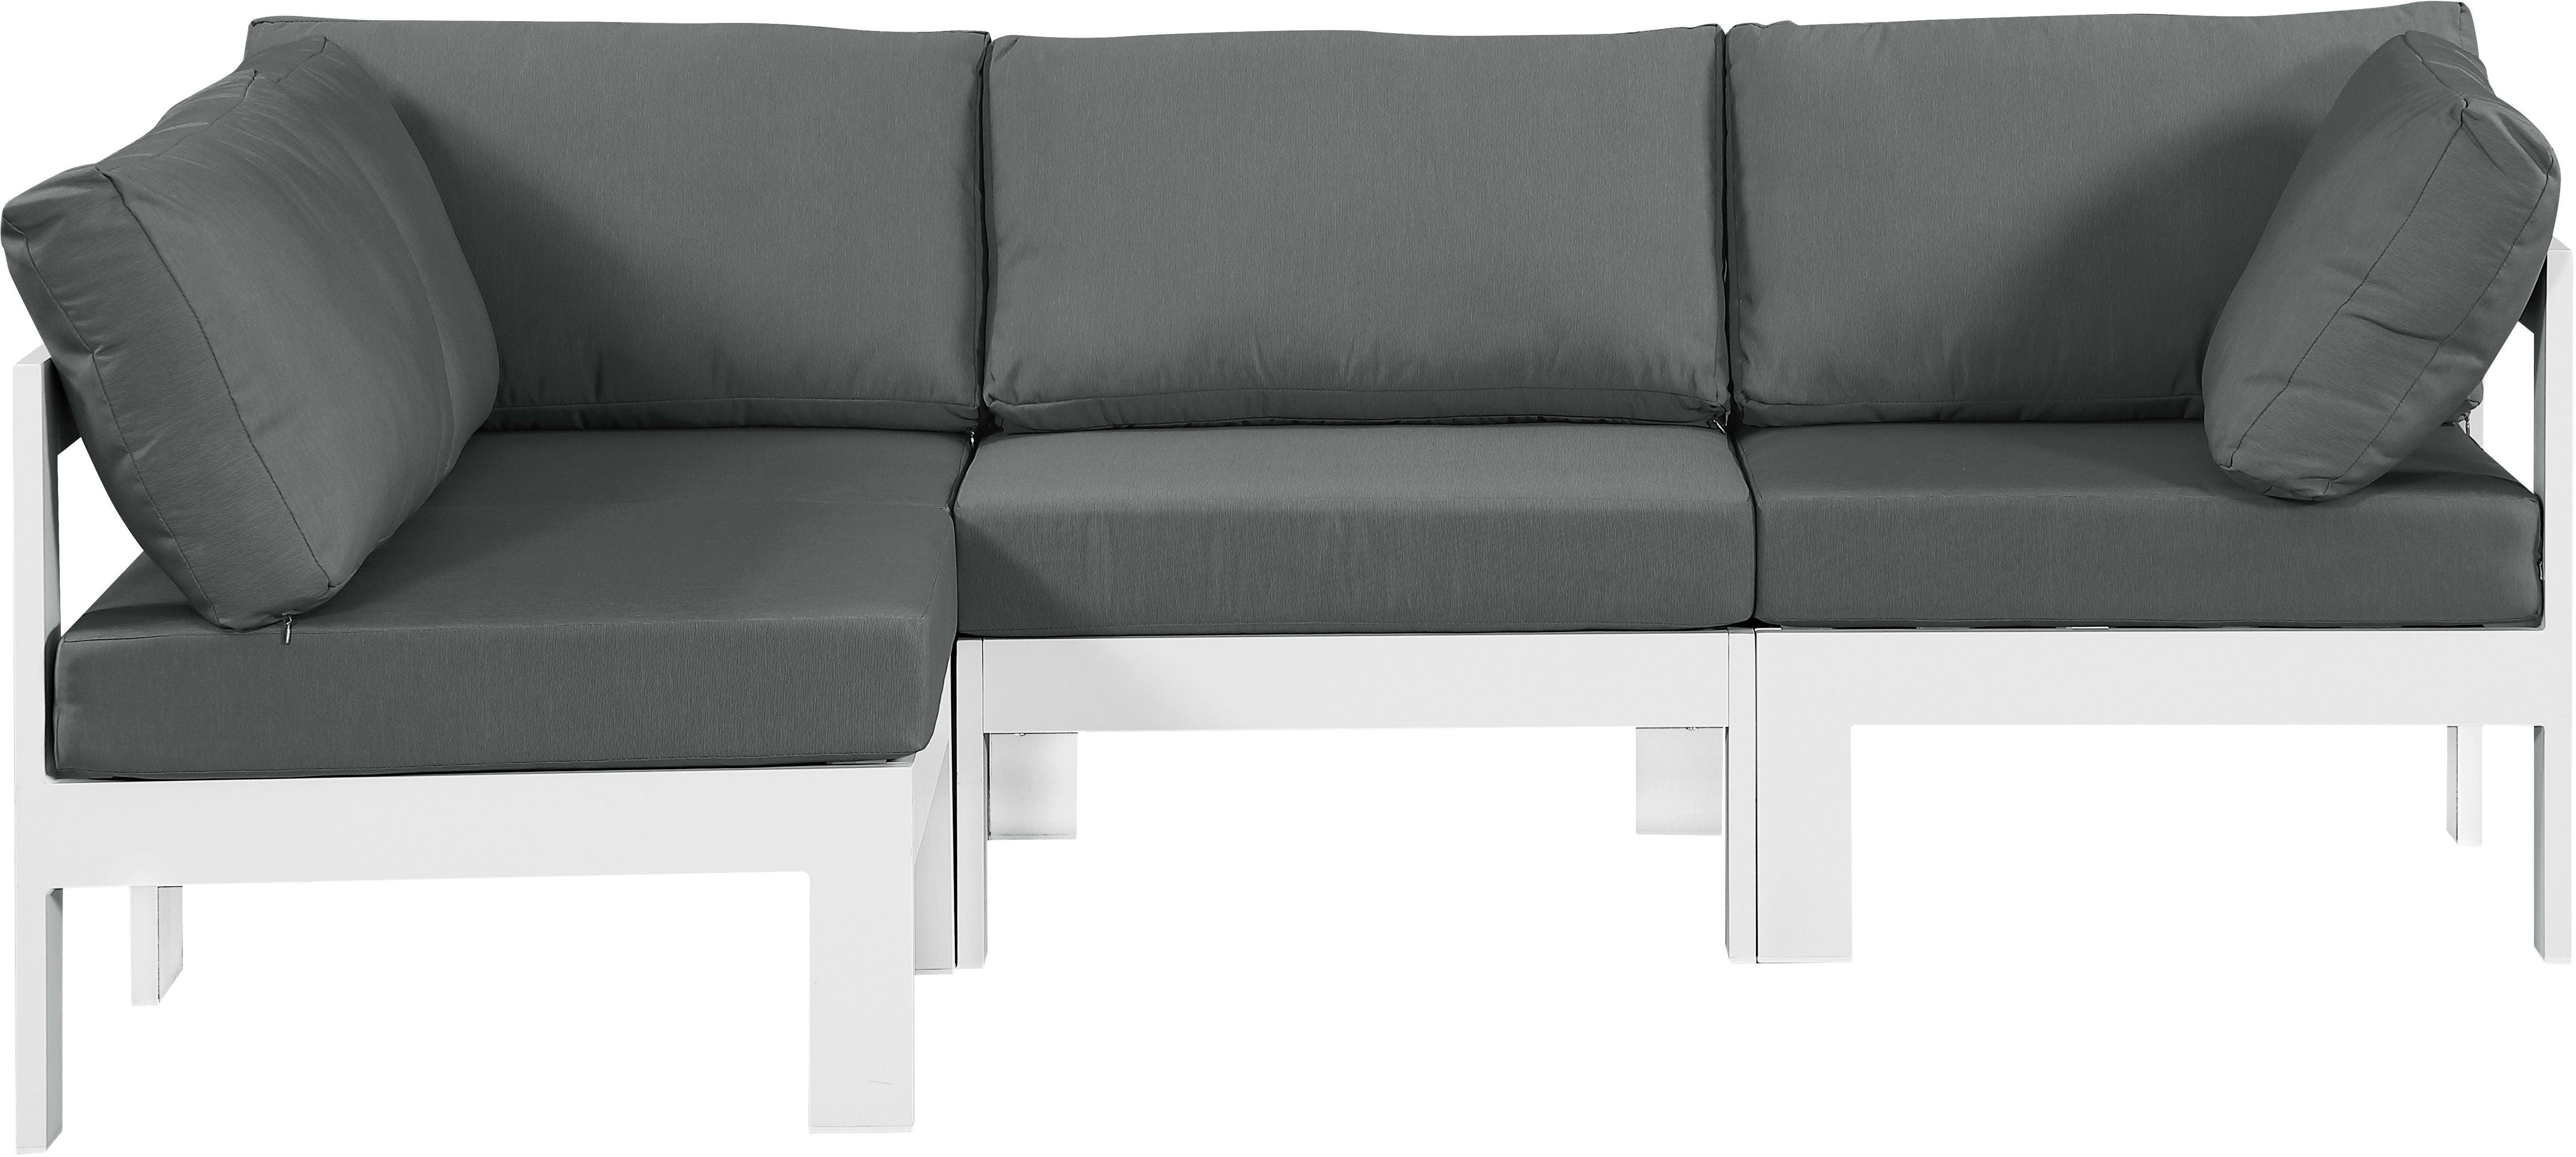 Meridian Furniture - Nizuc - Outdoor Patio Modular Sectional 4 Piece - Grey - Fabric - 5th Avenue Furniture